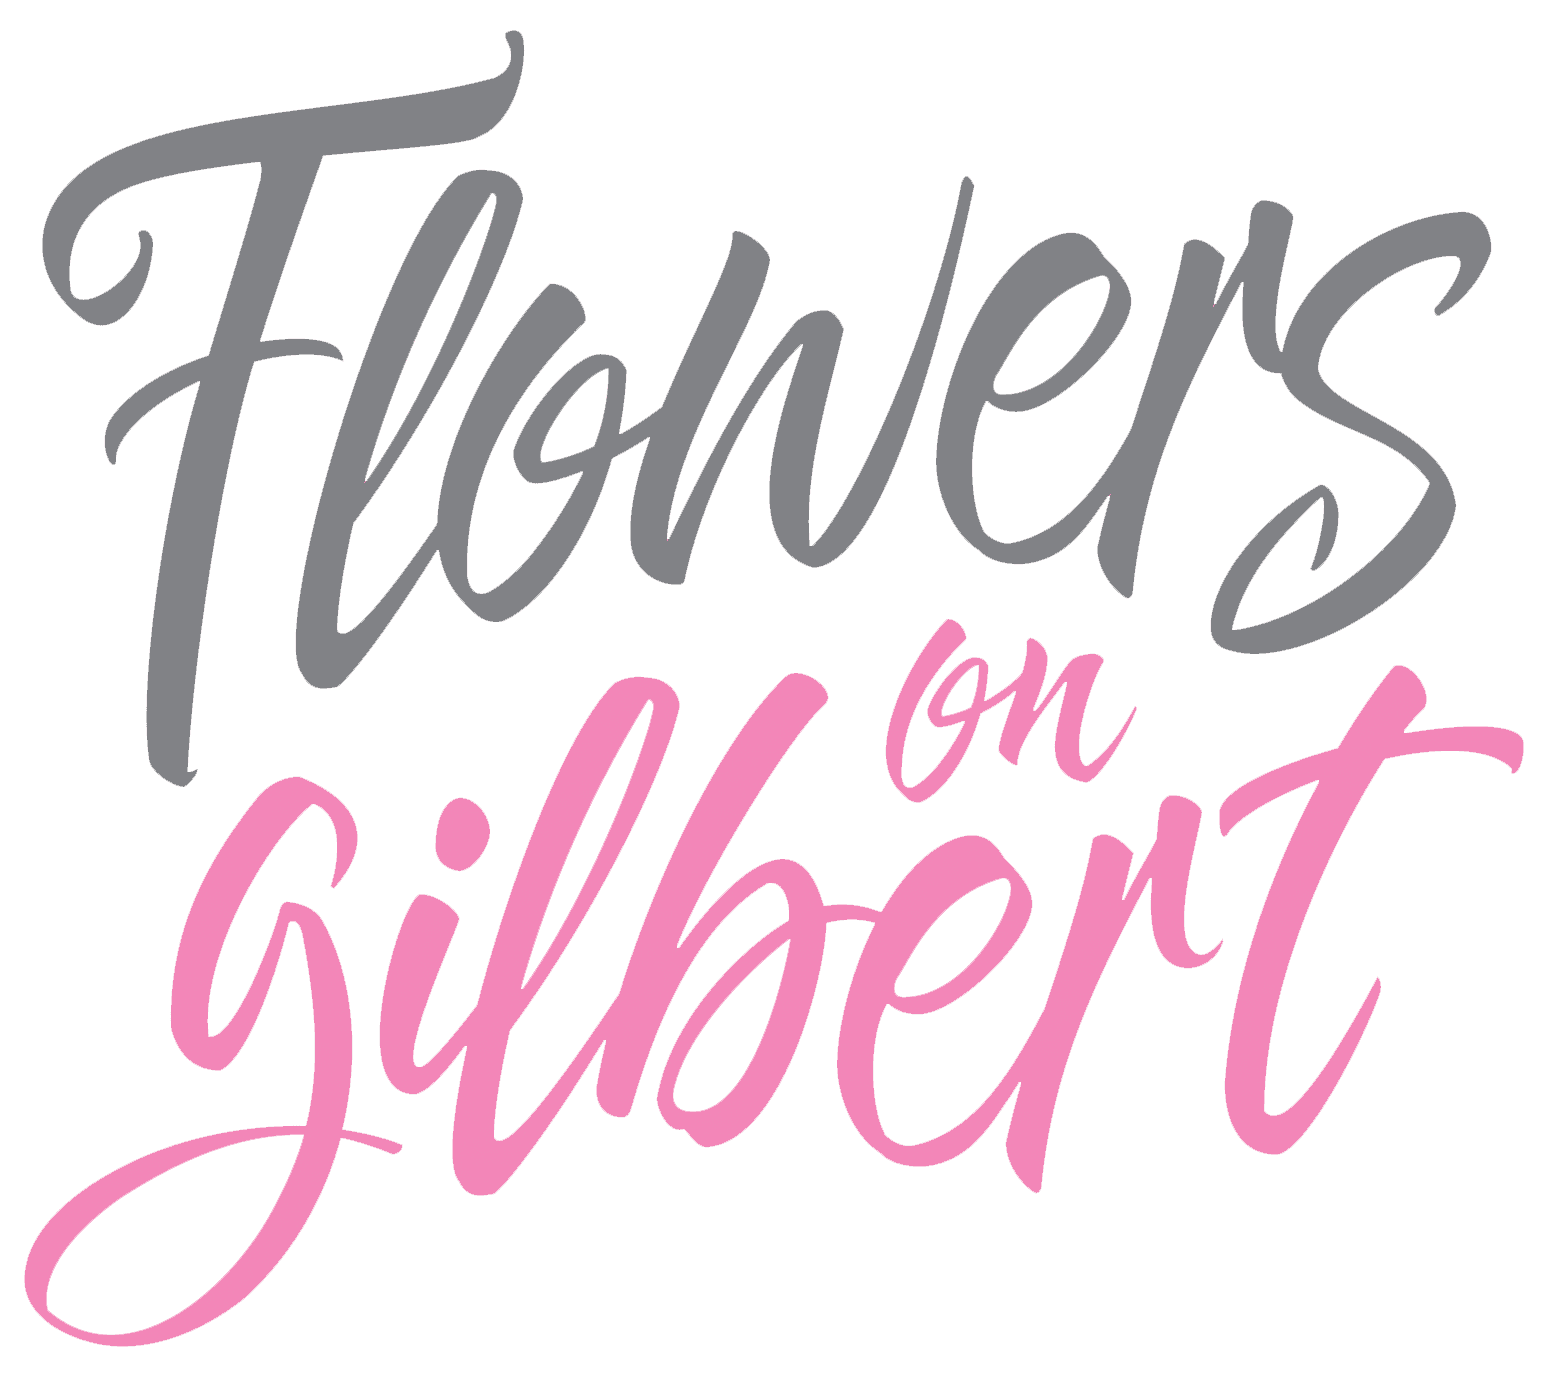 Flowers on Gilbert